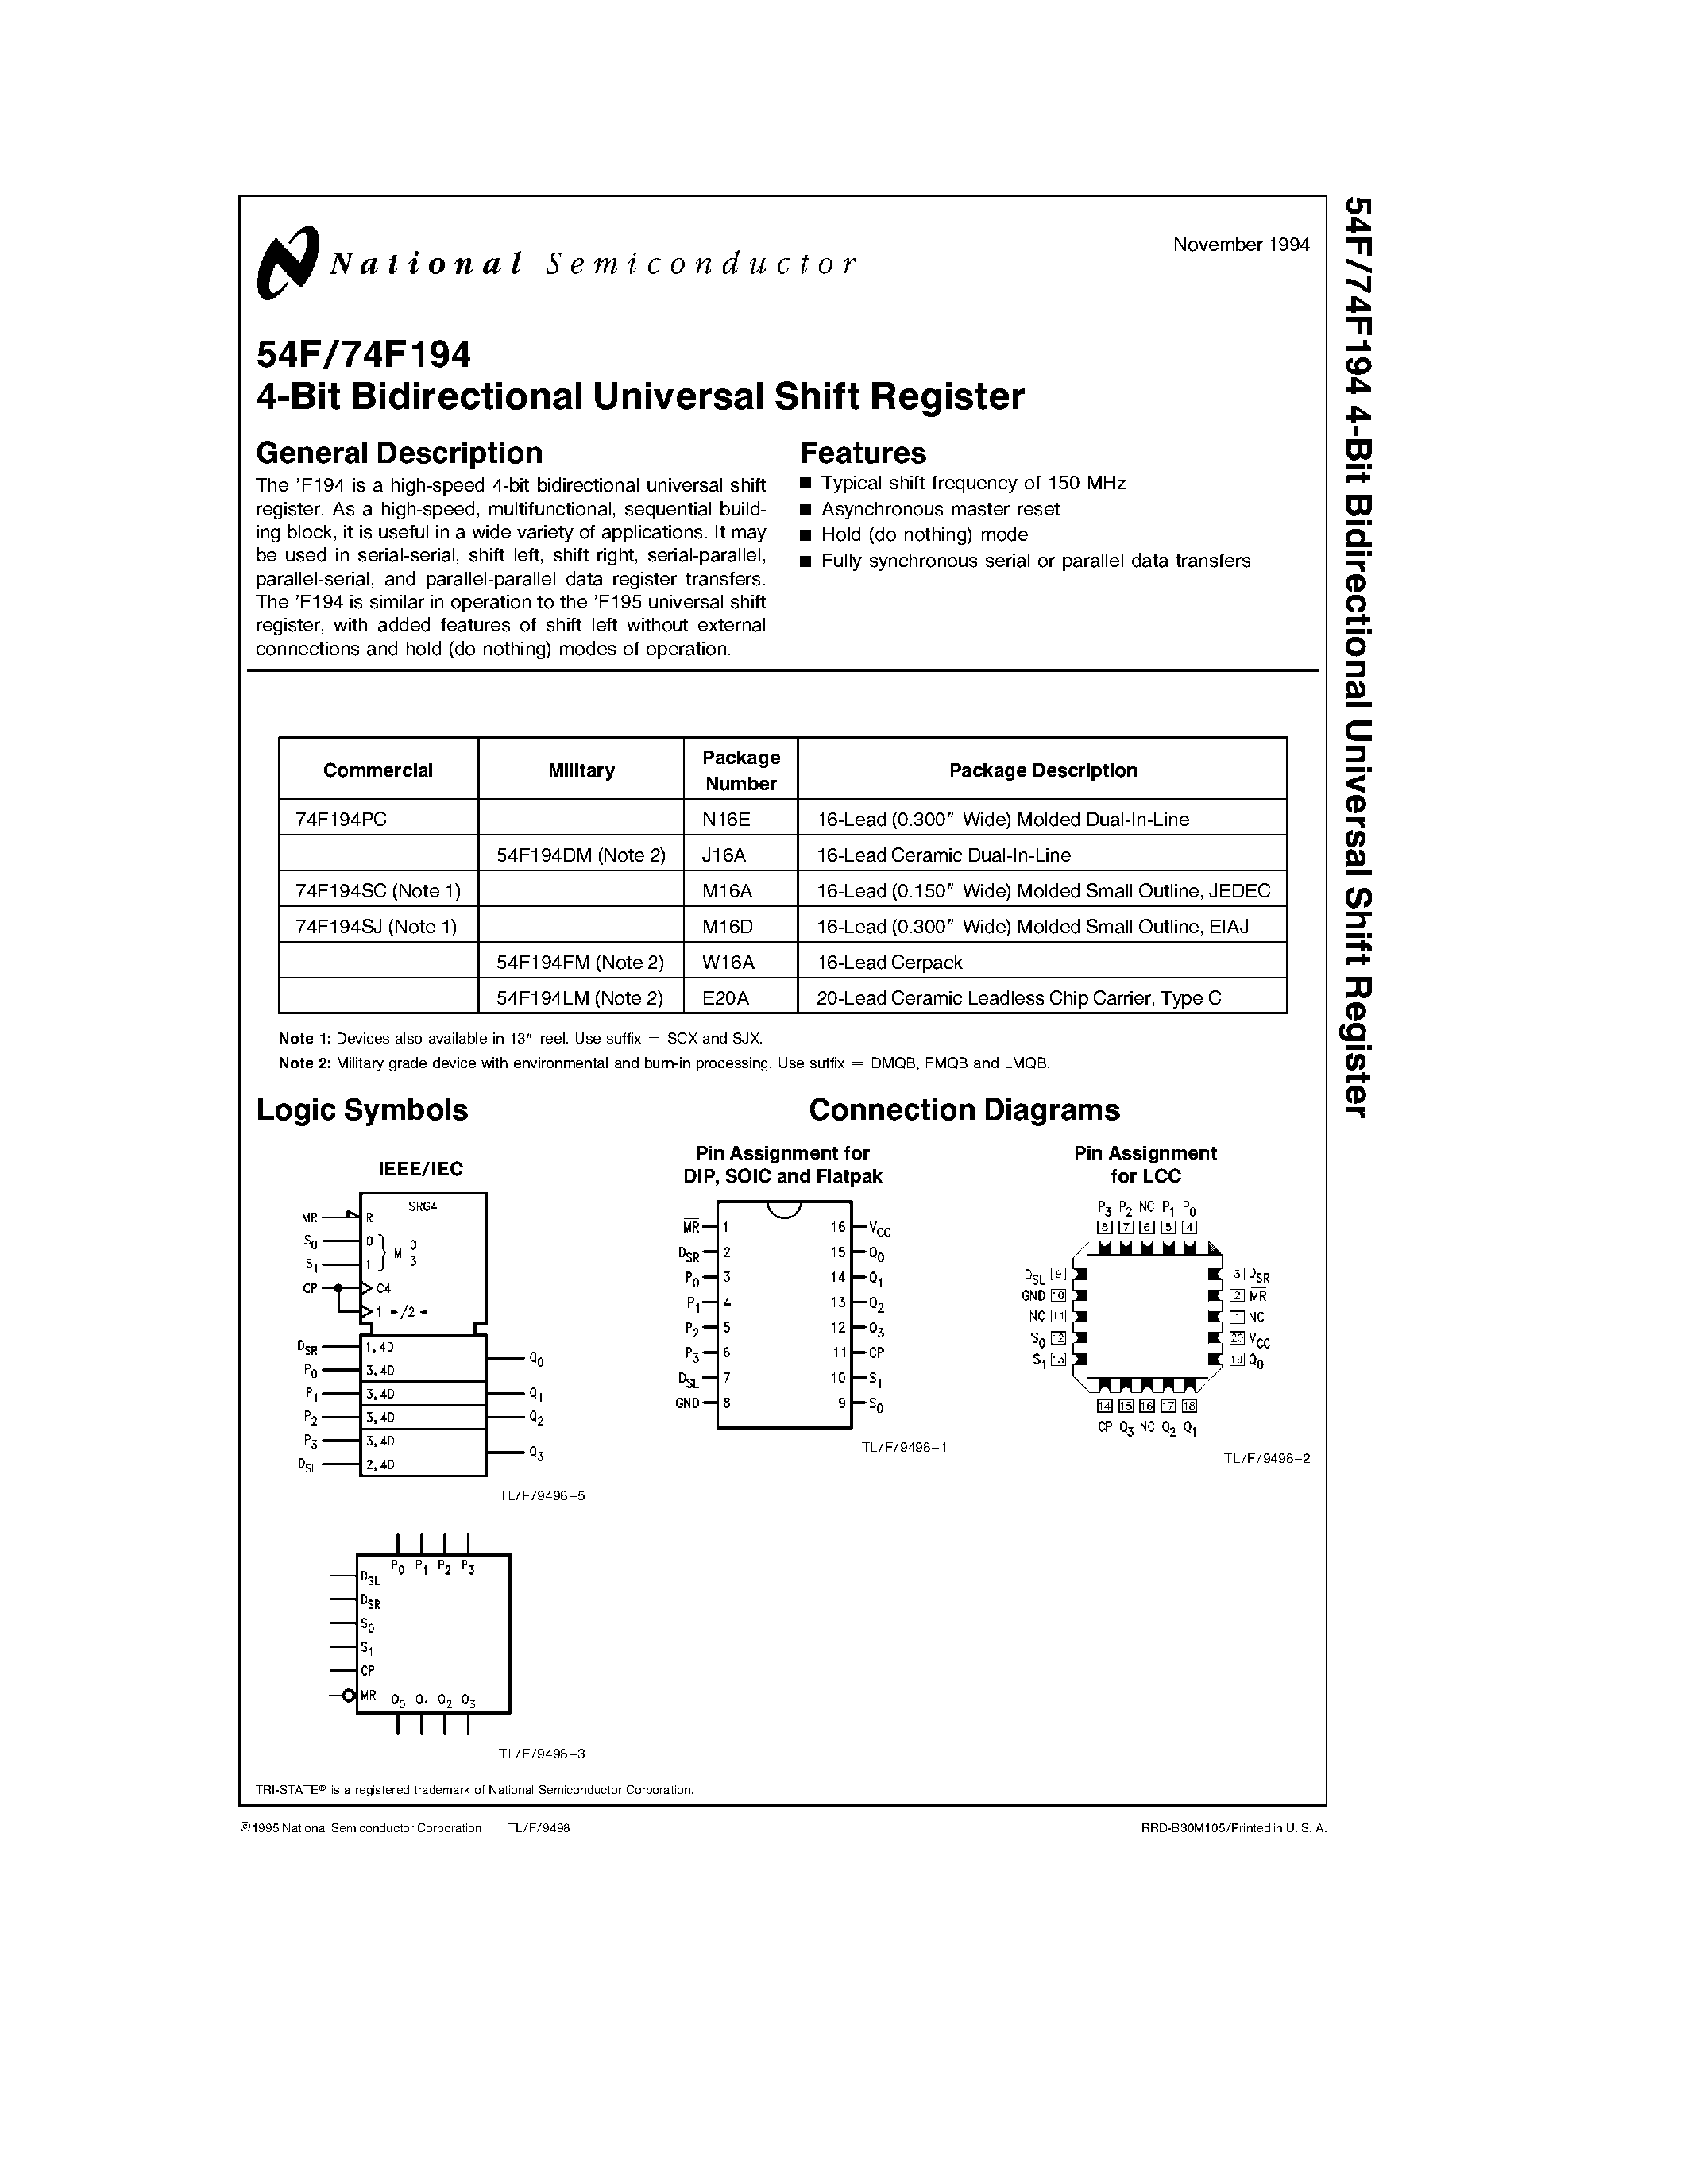 Datasheet 74F194PC - 4-Bit Bidirectional Universal Shift Register page 1